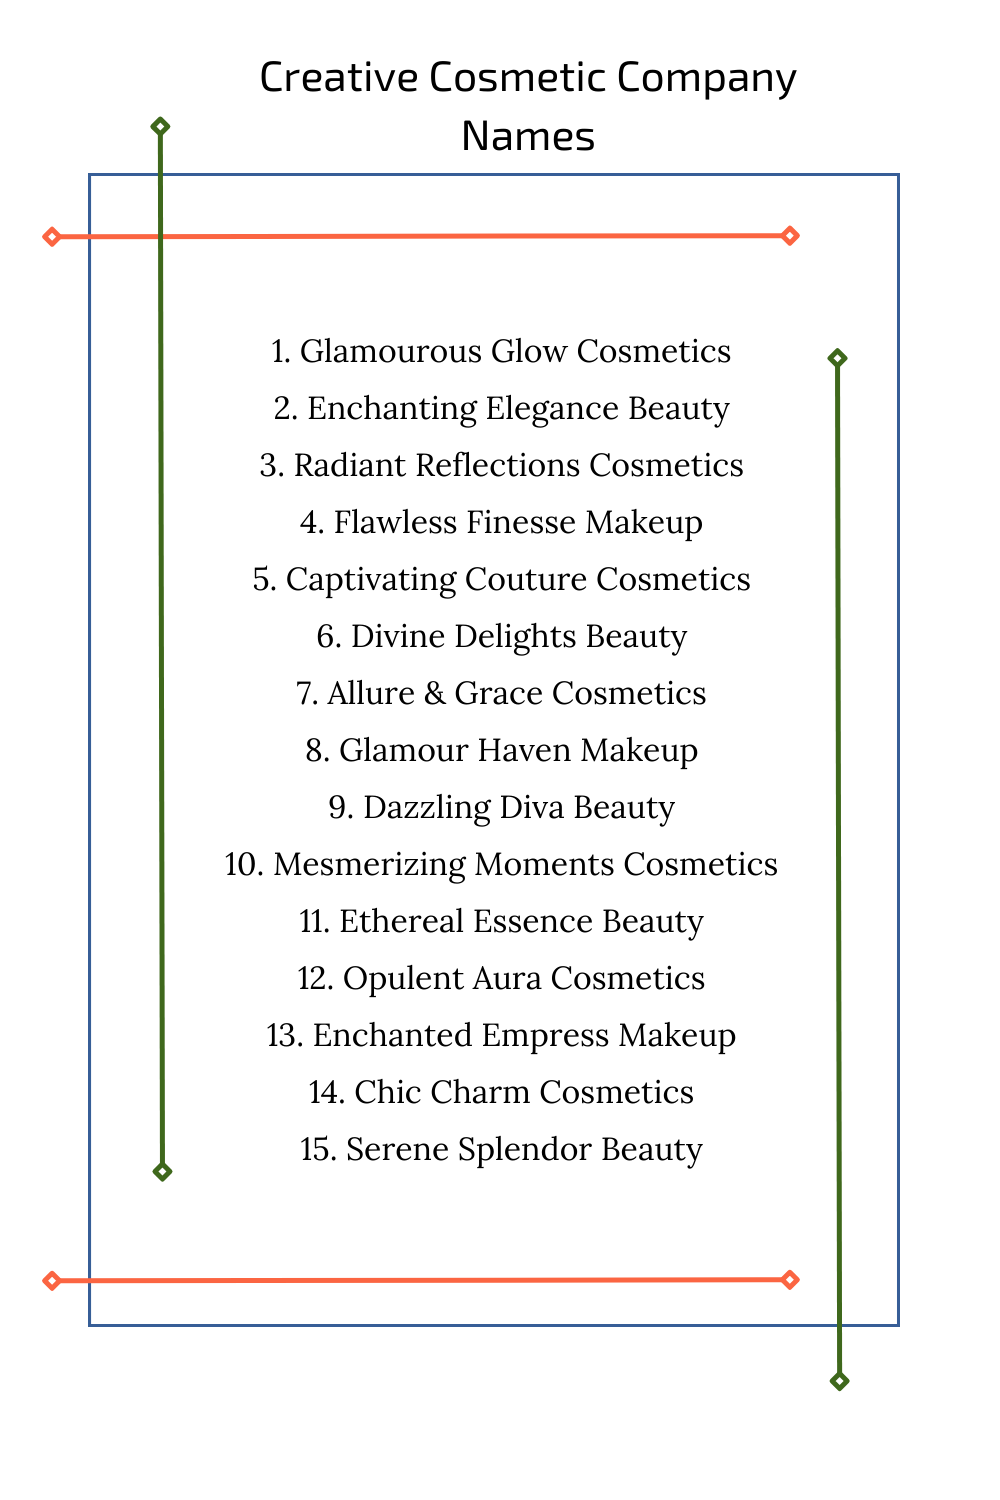 Creative Cosmetic Company Names